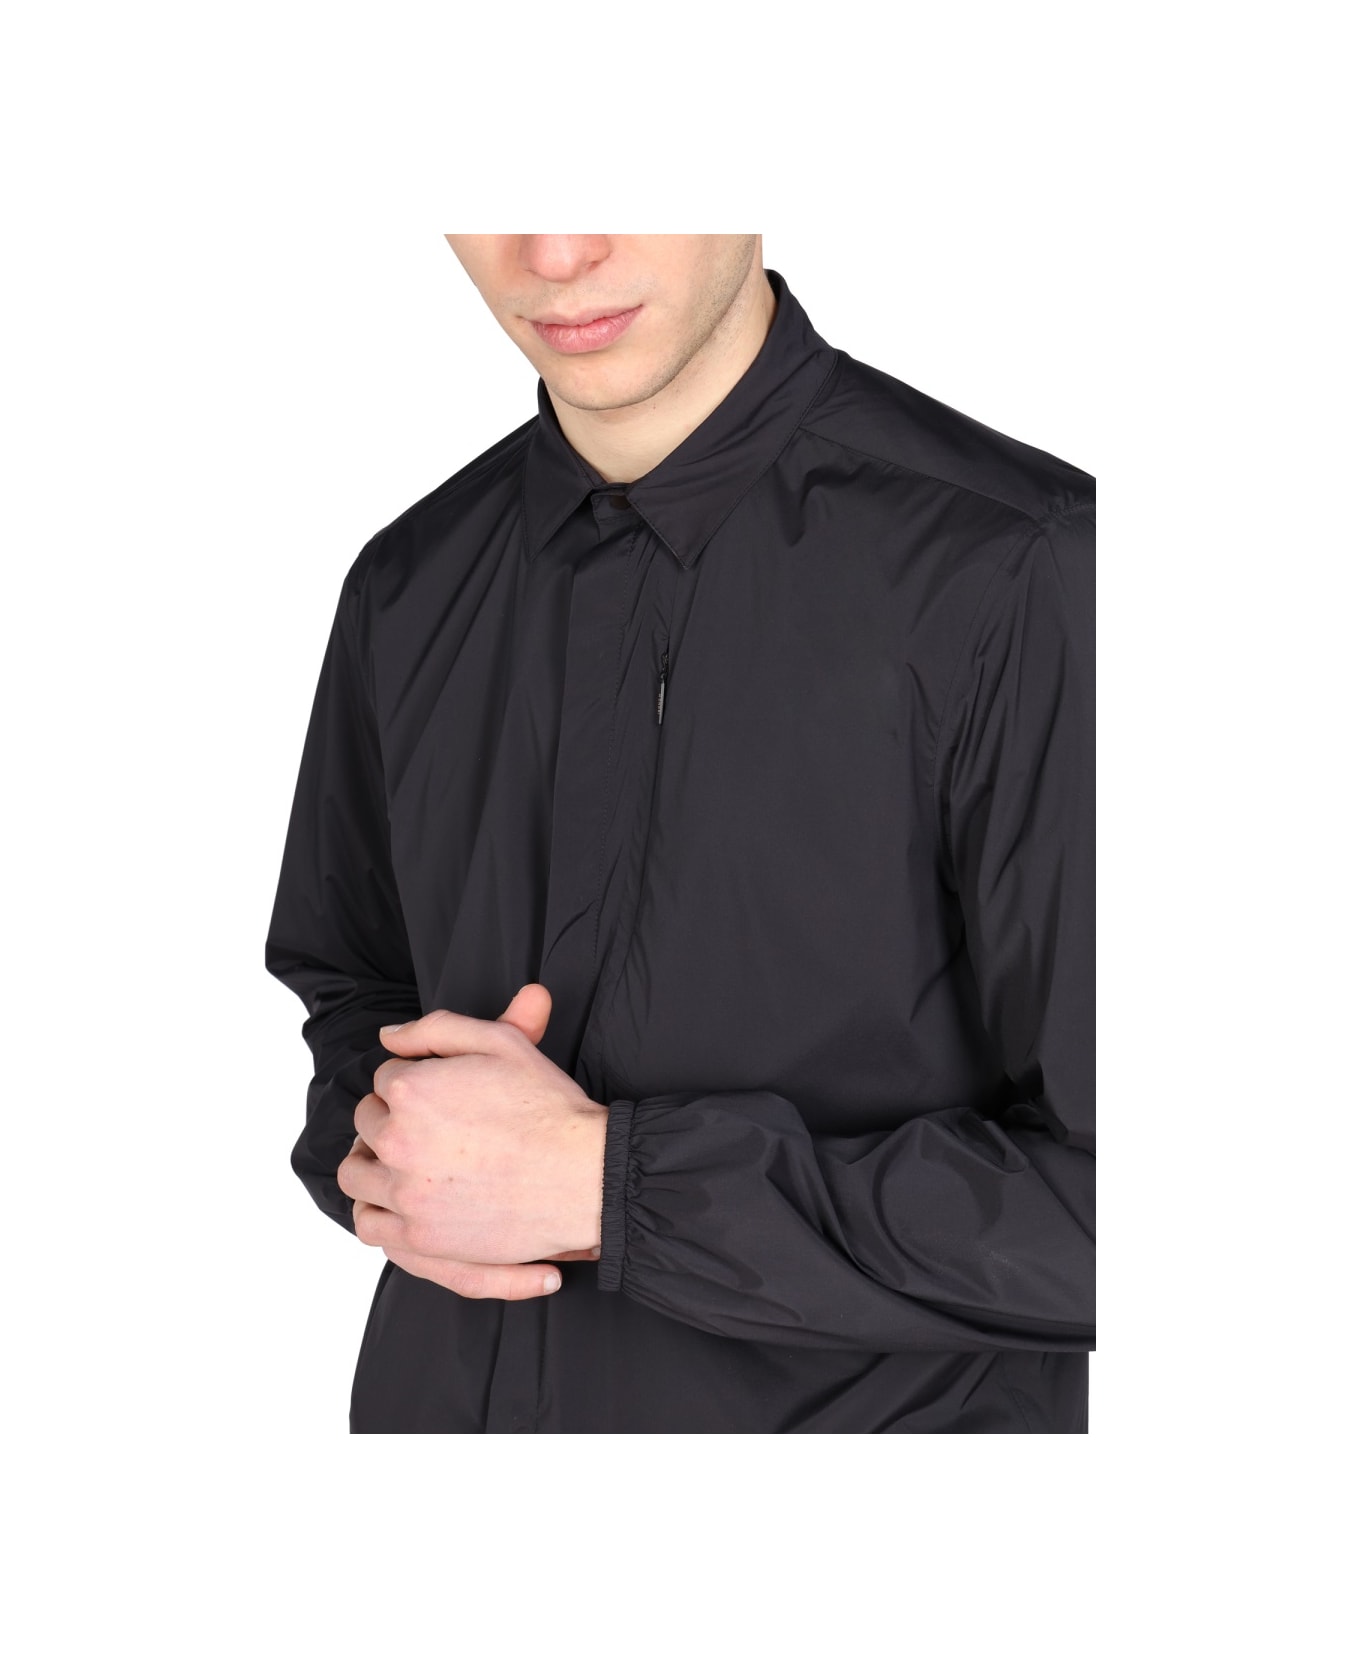 Monobi Shirt Jacket - BLACK ジャケット